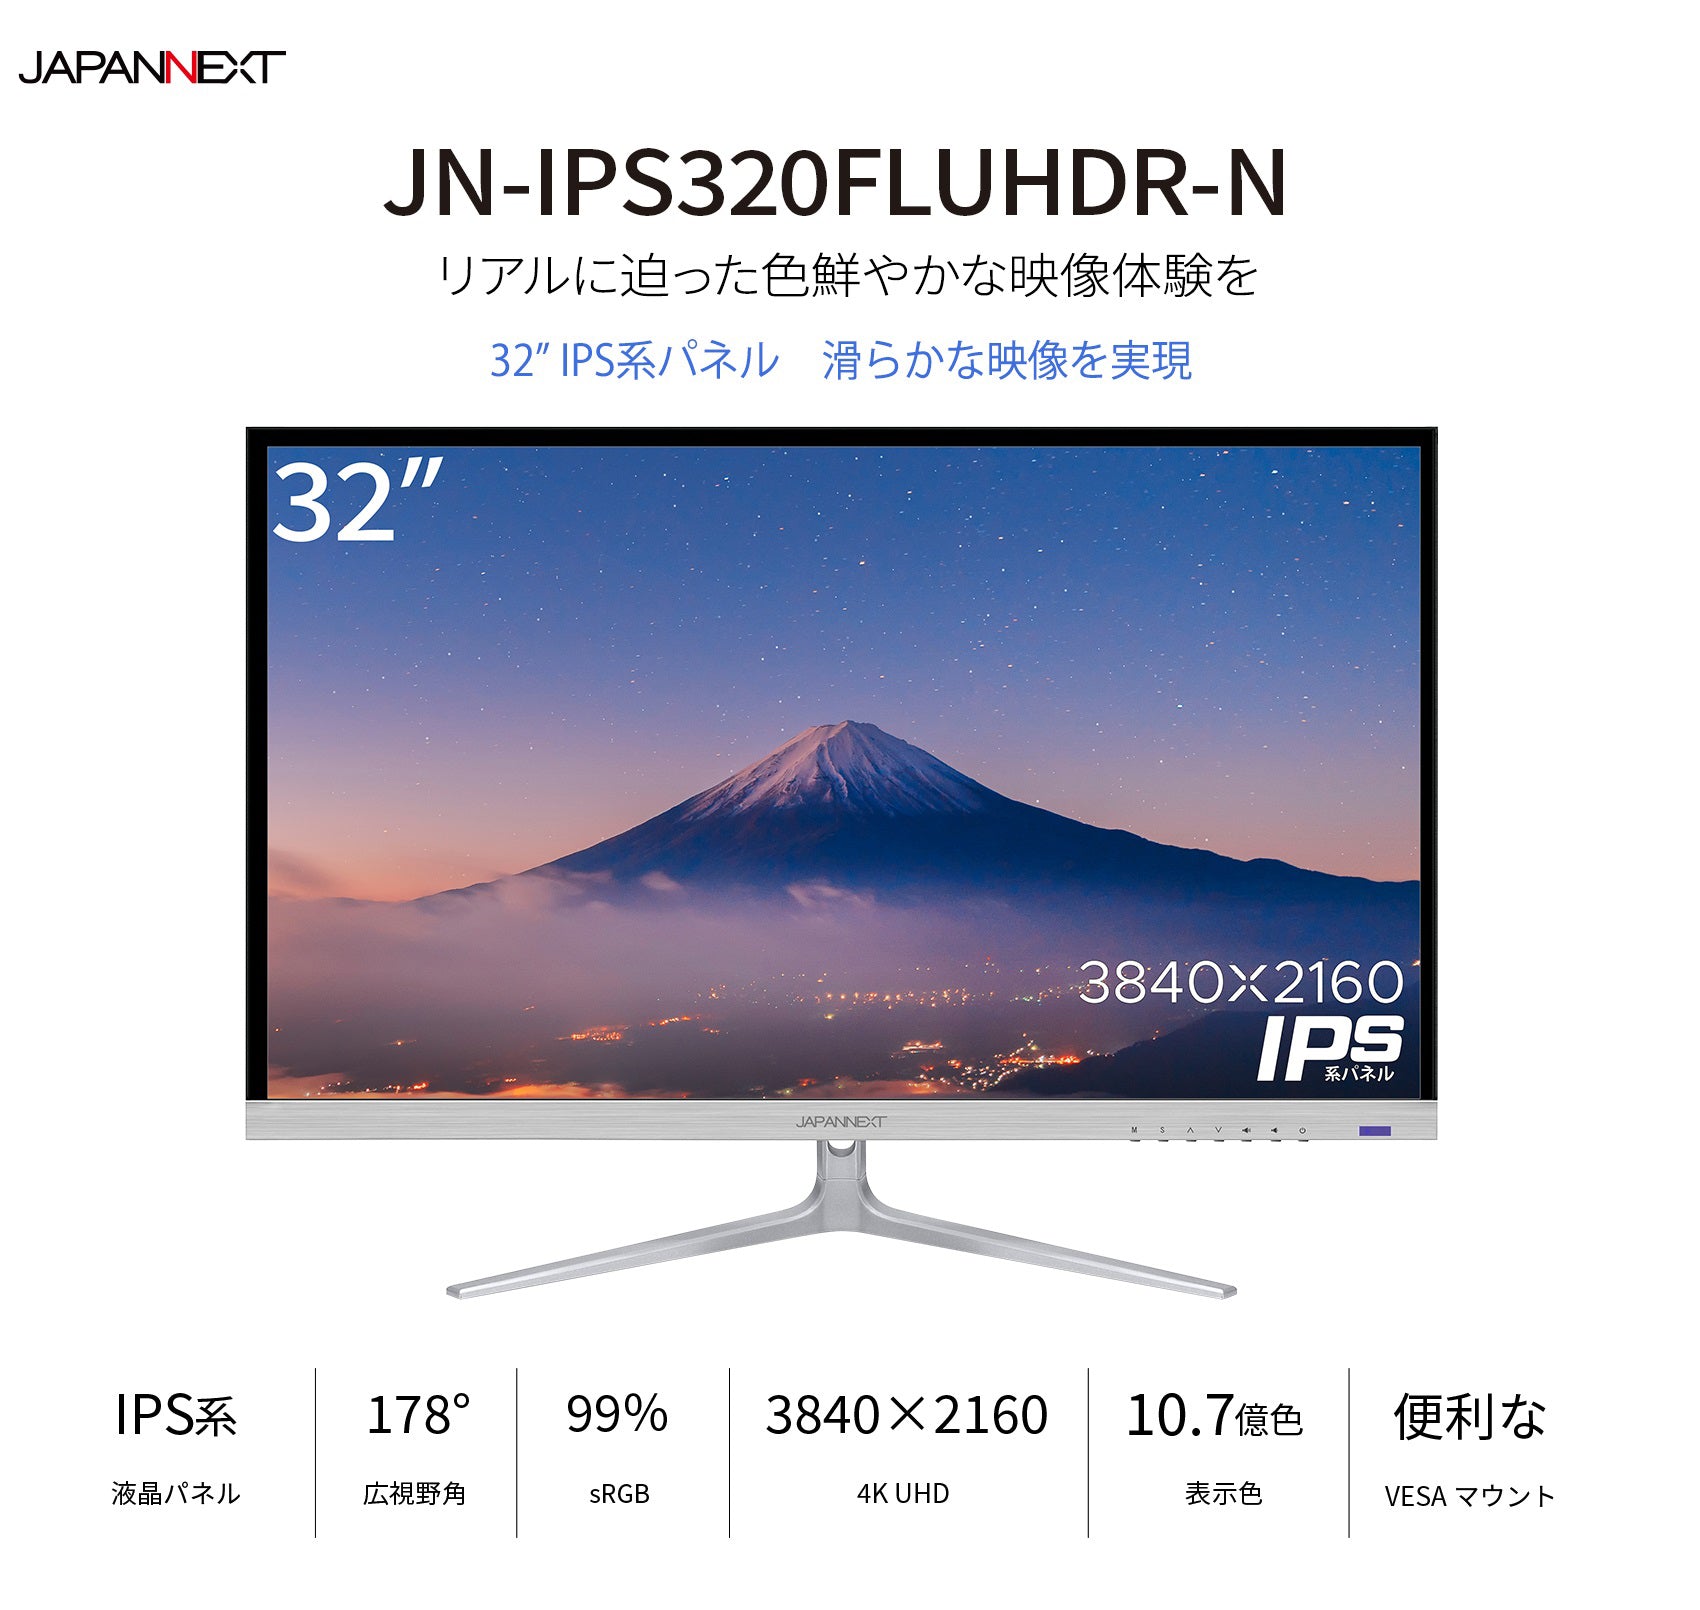 JN-IPS320FLUHDR-N